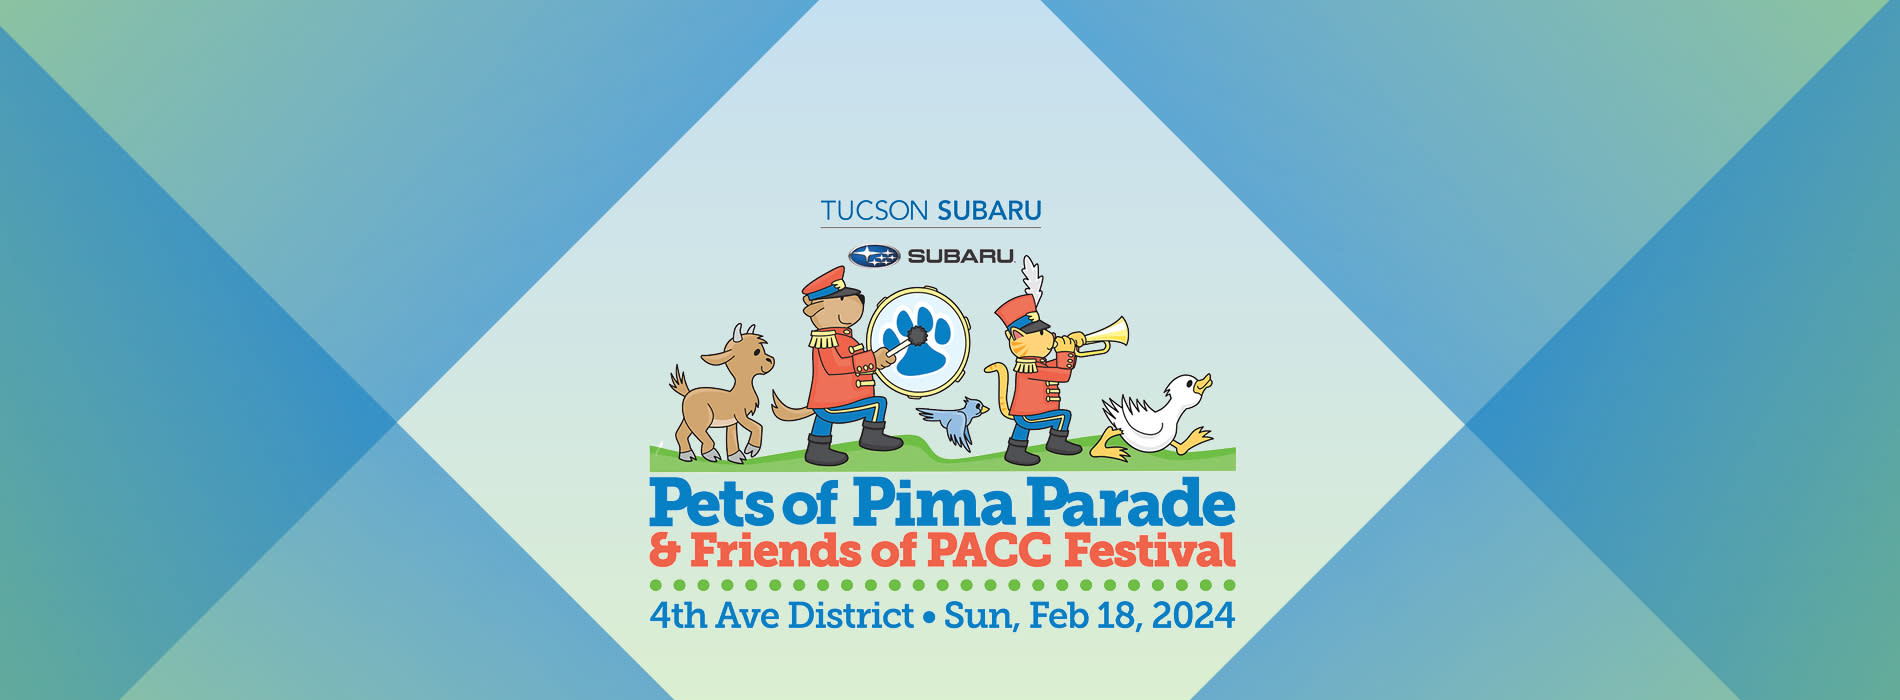 2024 Tucson Subaru Pets of Pima Parade & Friends of PACC Festival